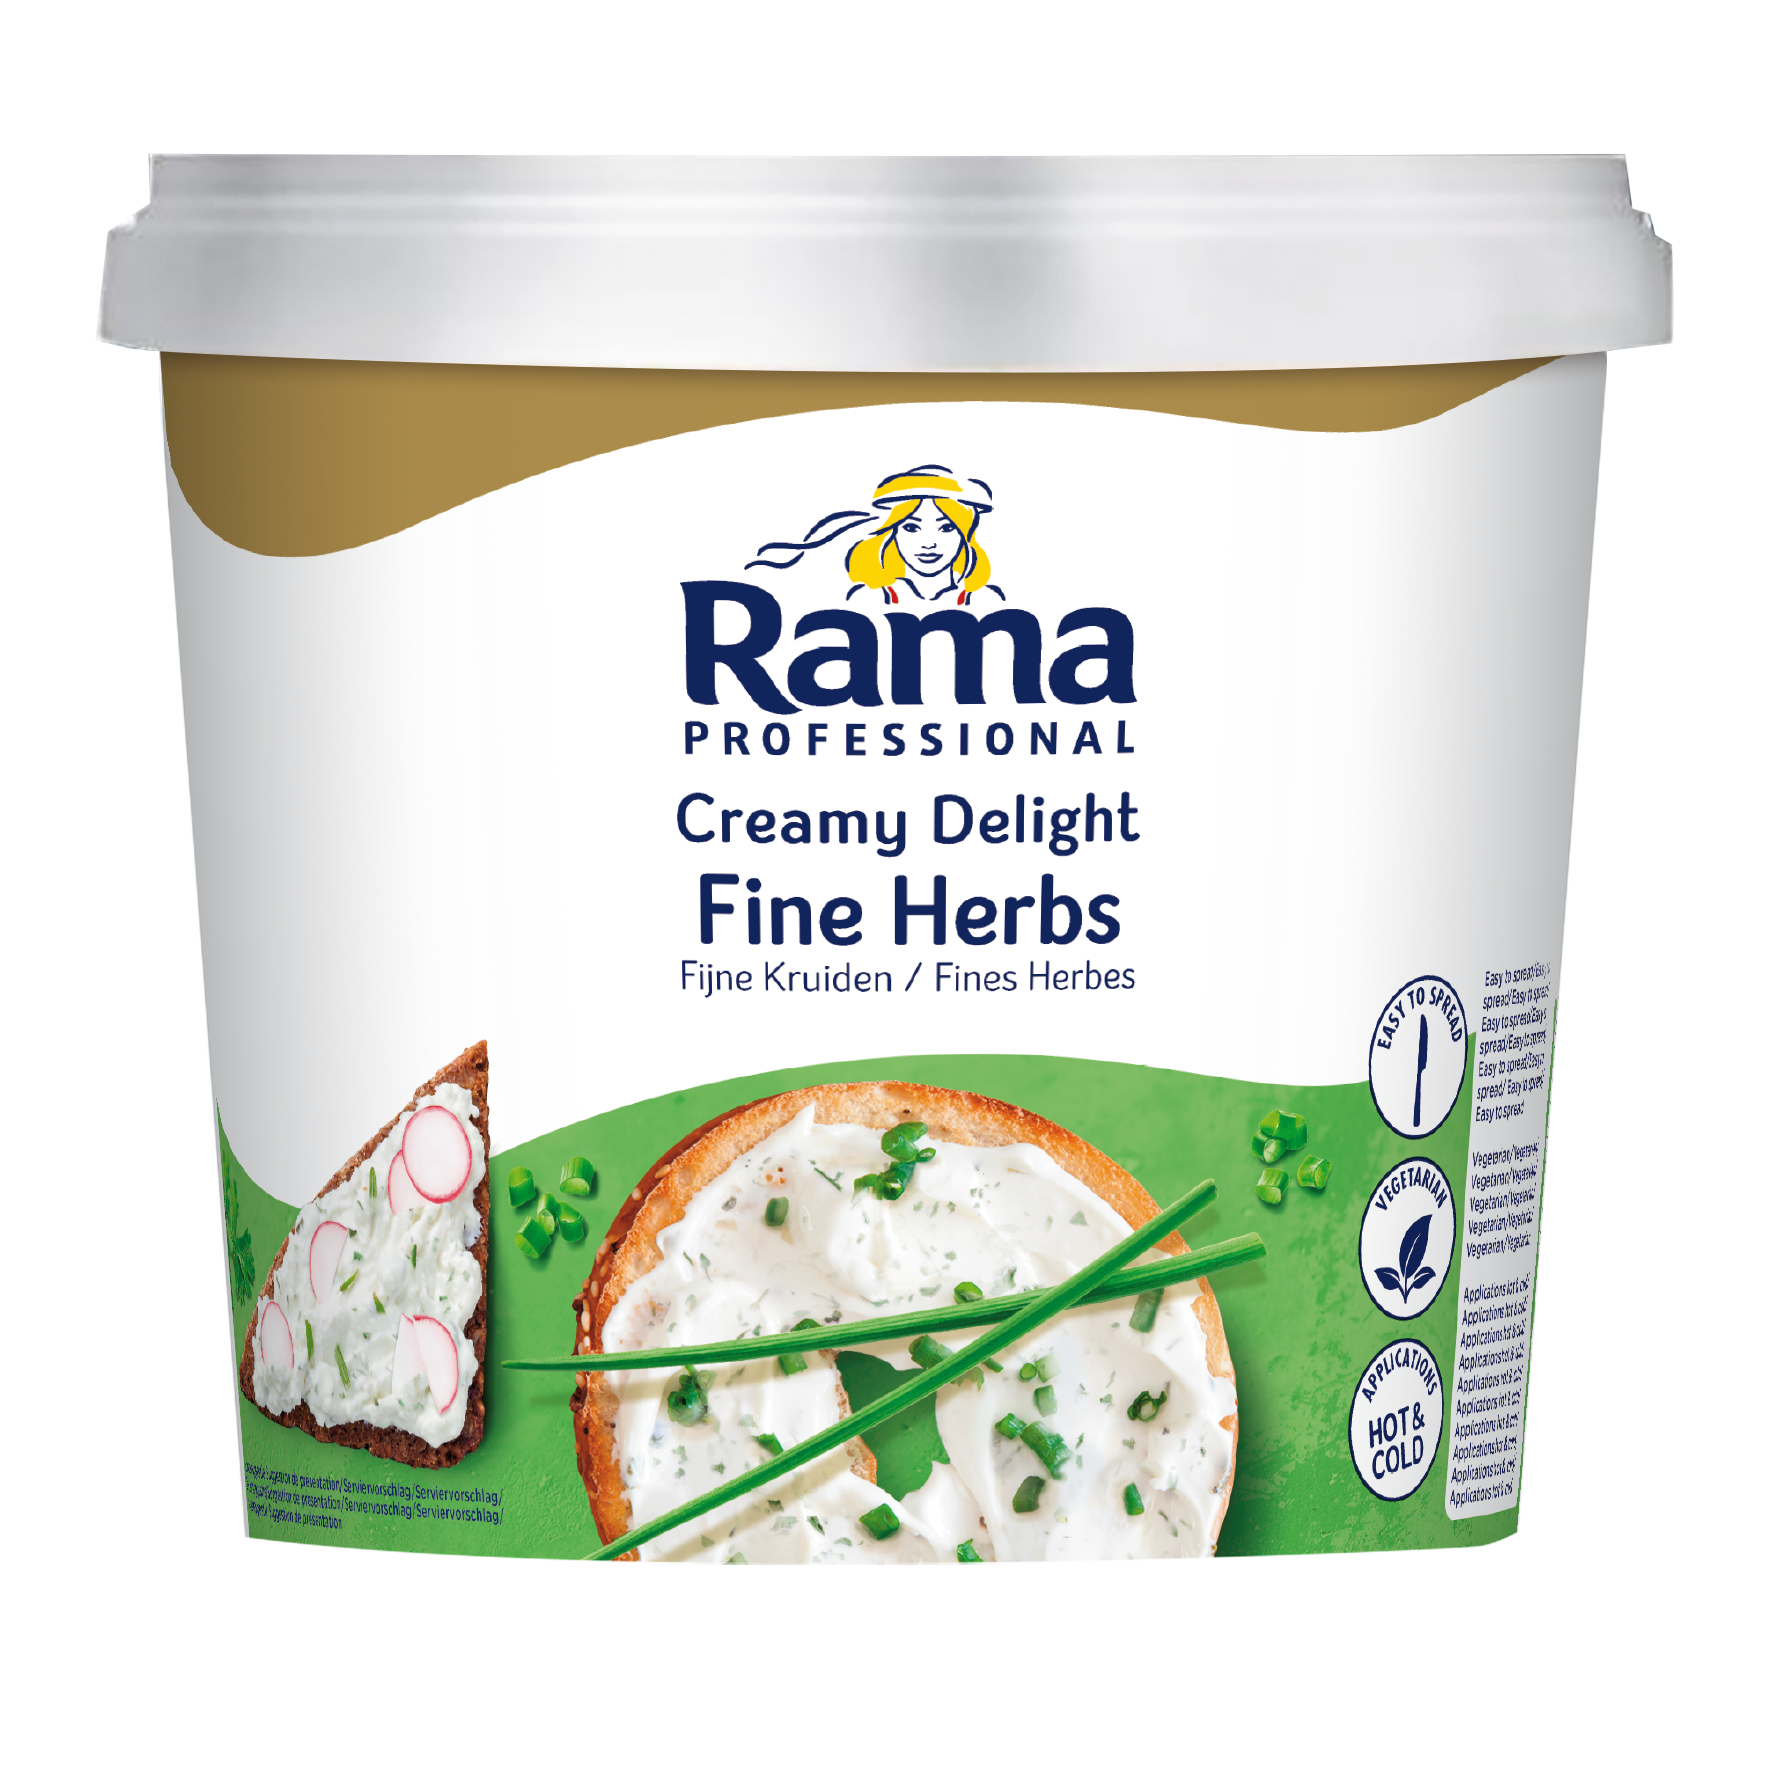 Rama Creamy Delight fines herbes 1.5kg